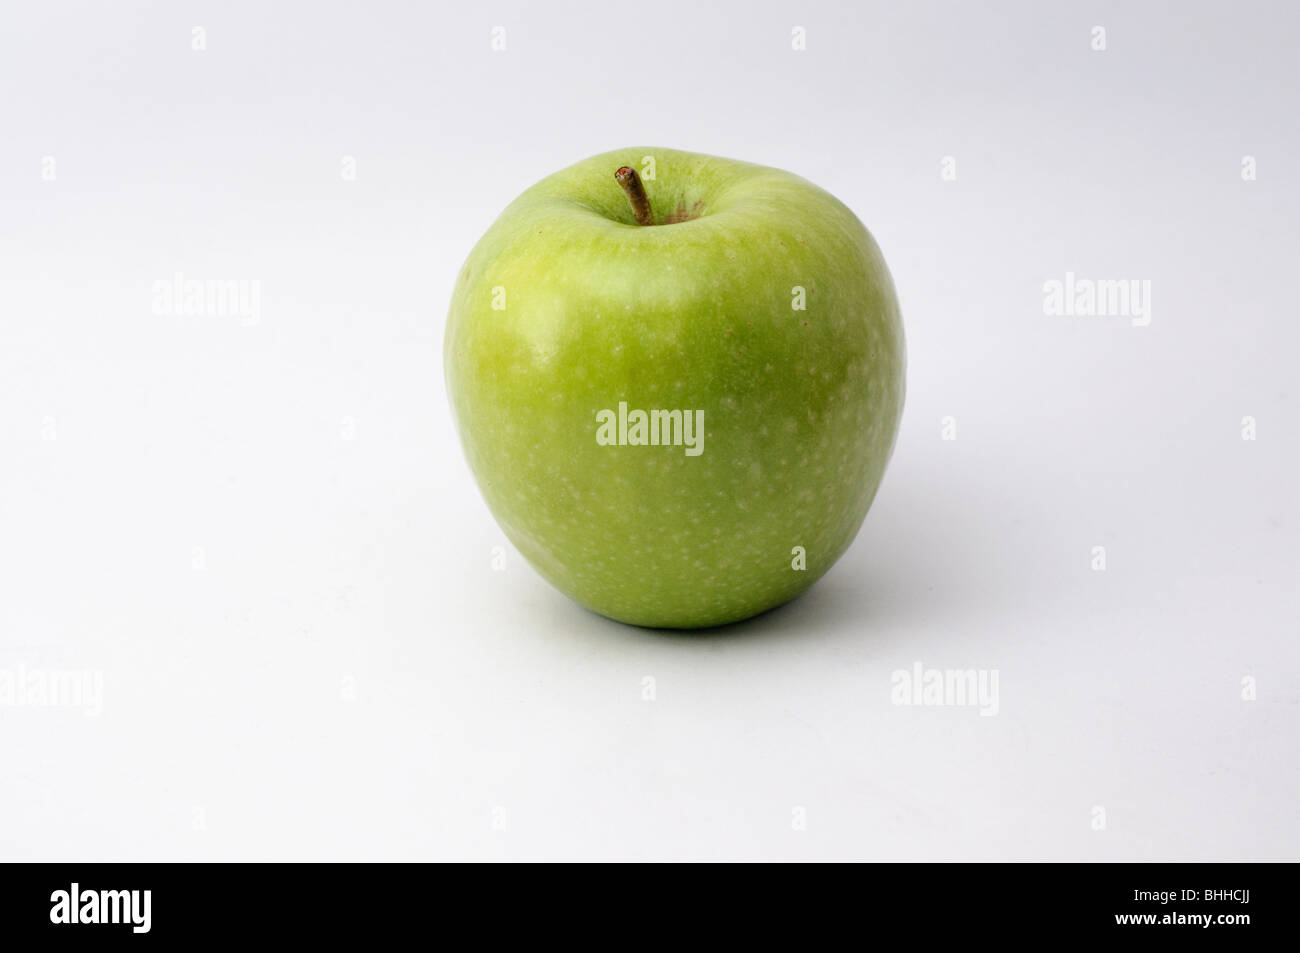 Green apple of Smith variety Stock Photo